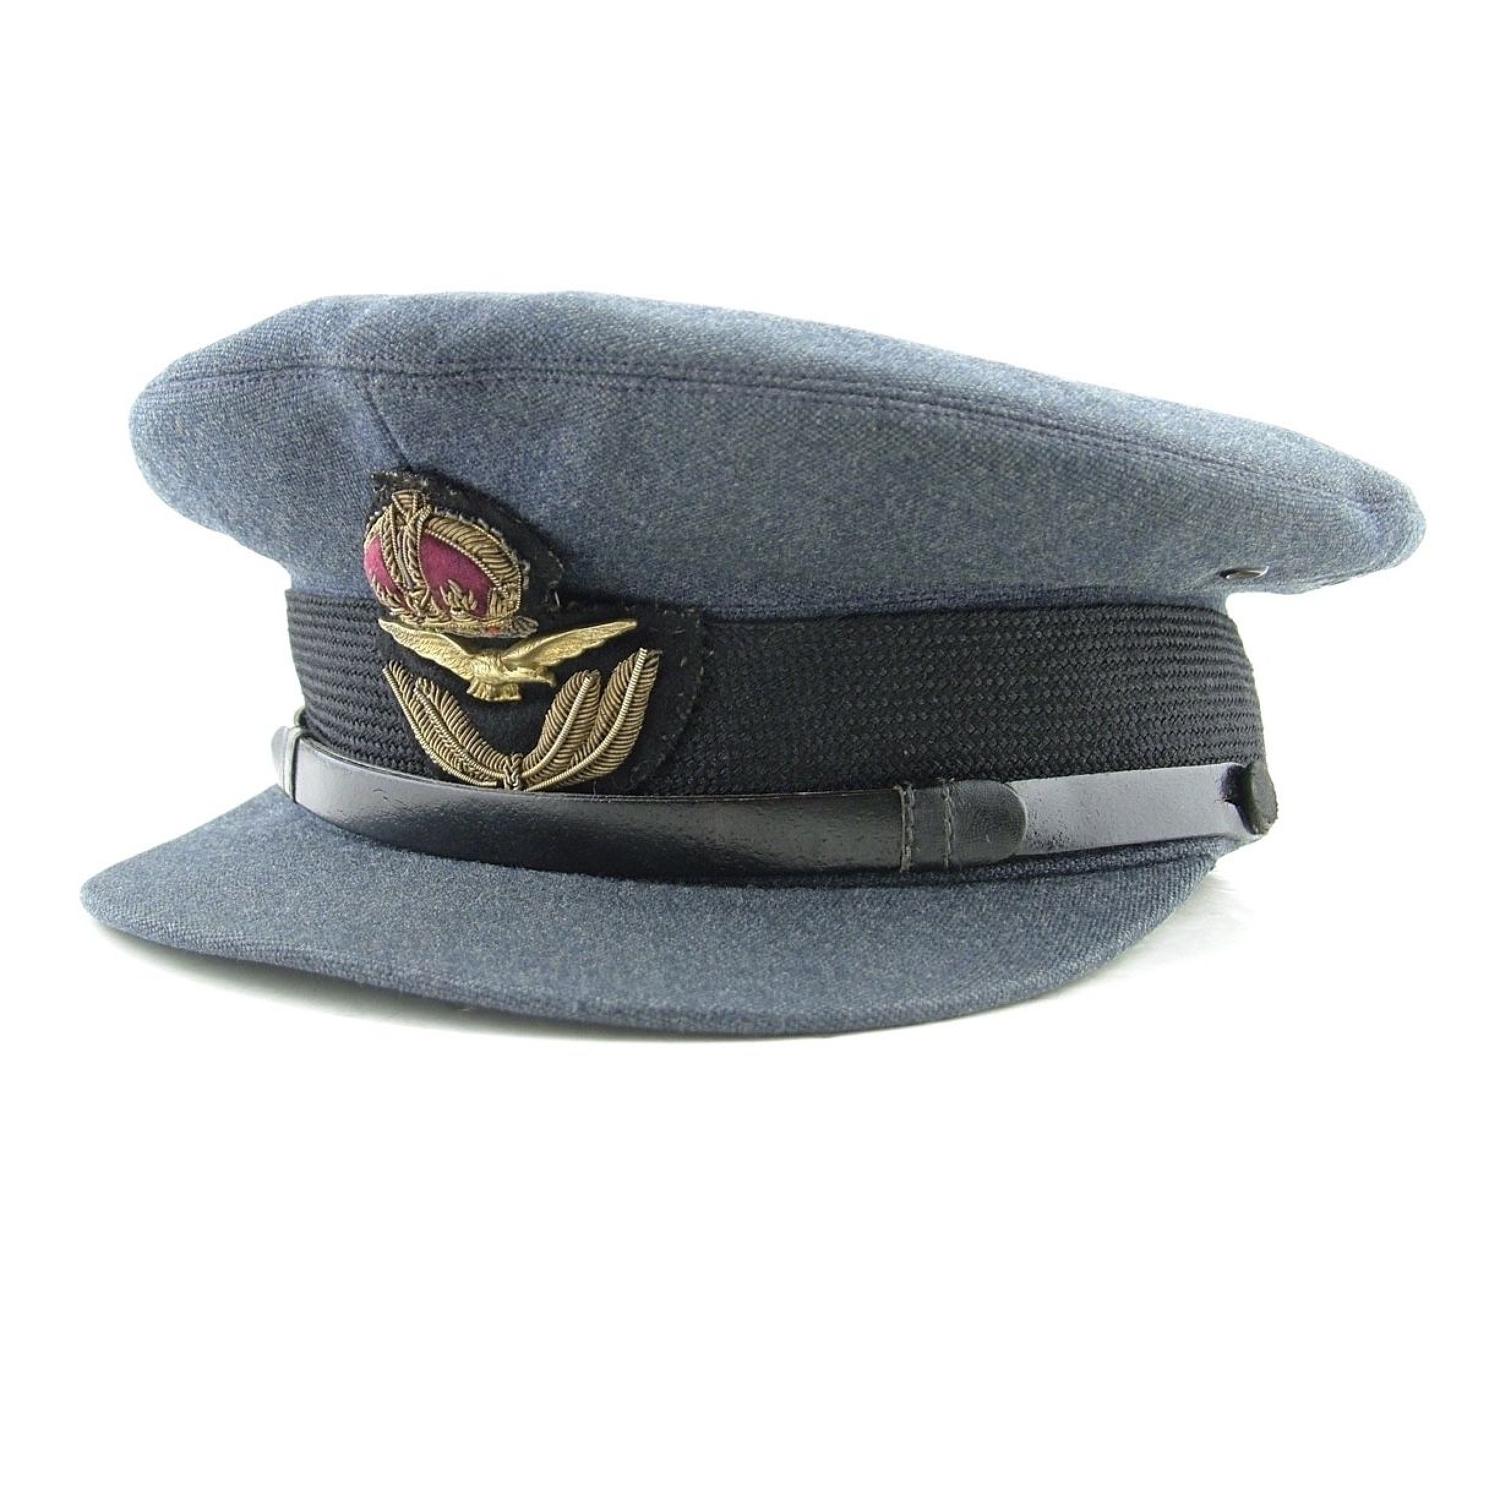 RAF pre-WW2 officer rank service dress cap